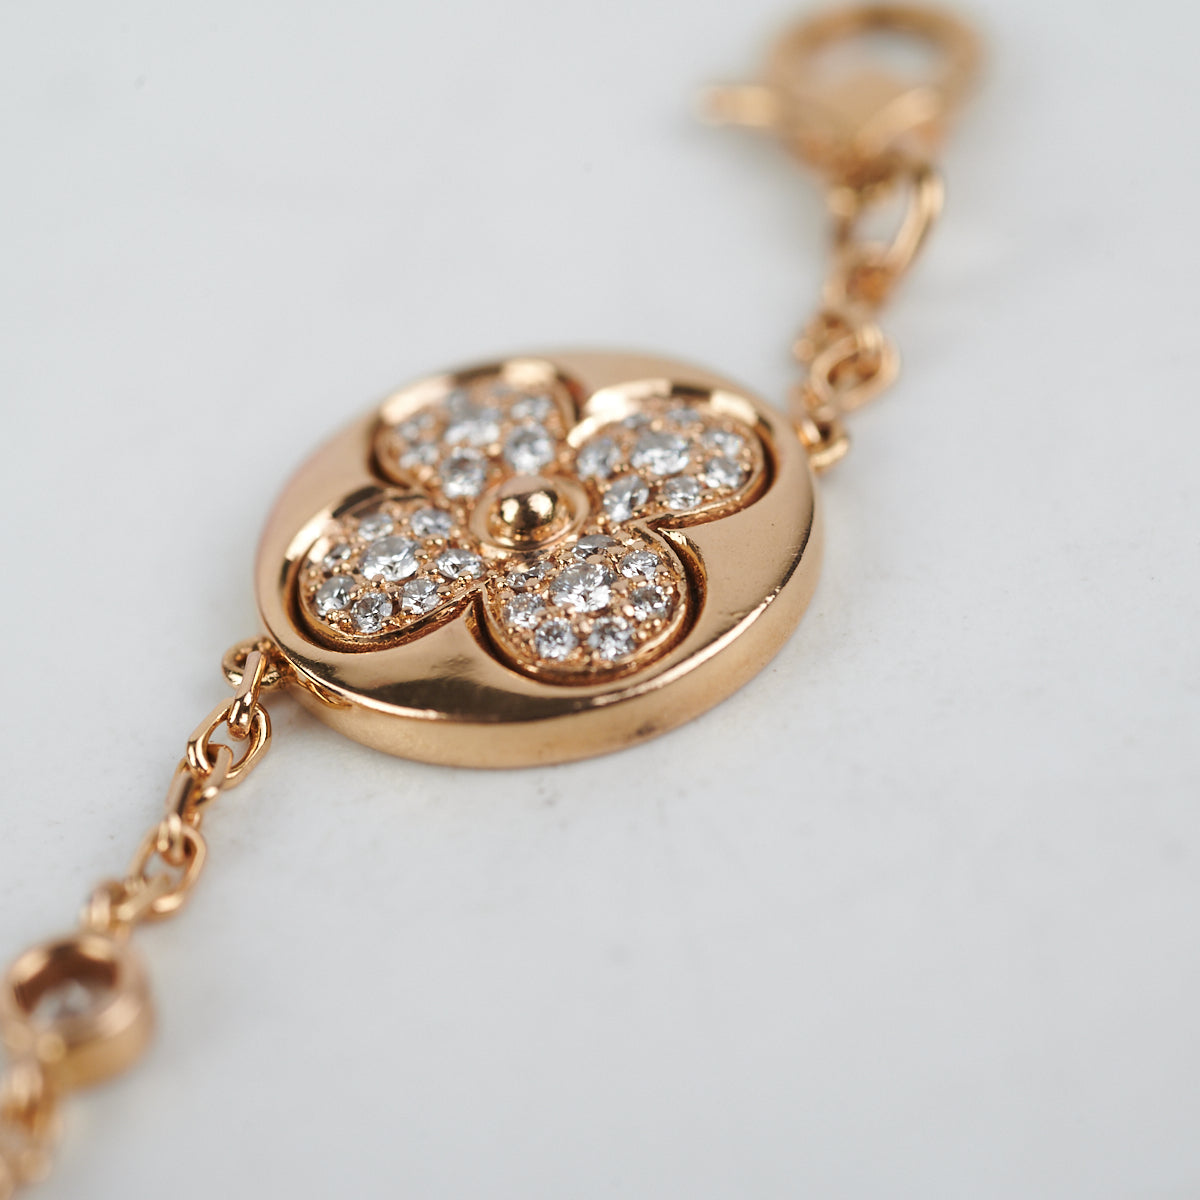 Louis Vuitton Idylle Blossom Bracelet, Pink Gold and Diamonds. Size NSA